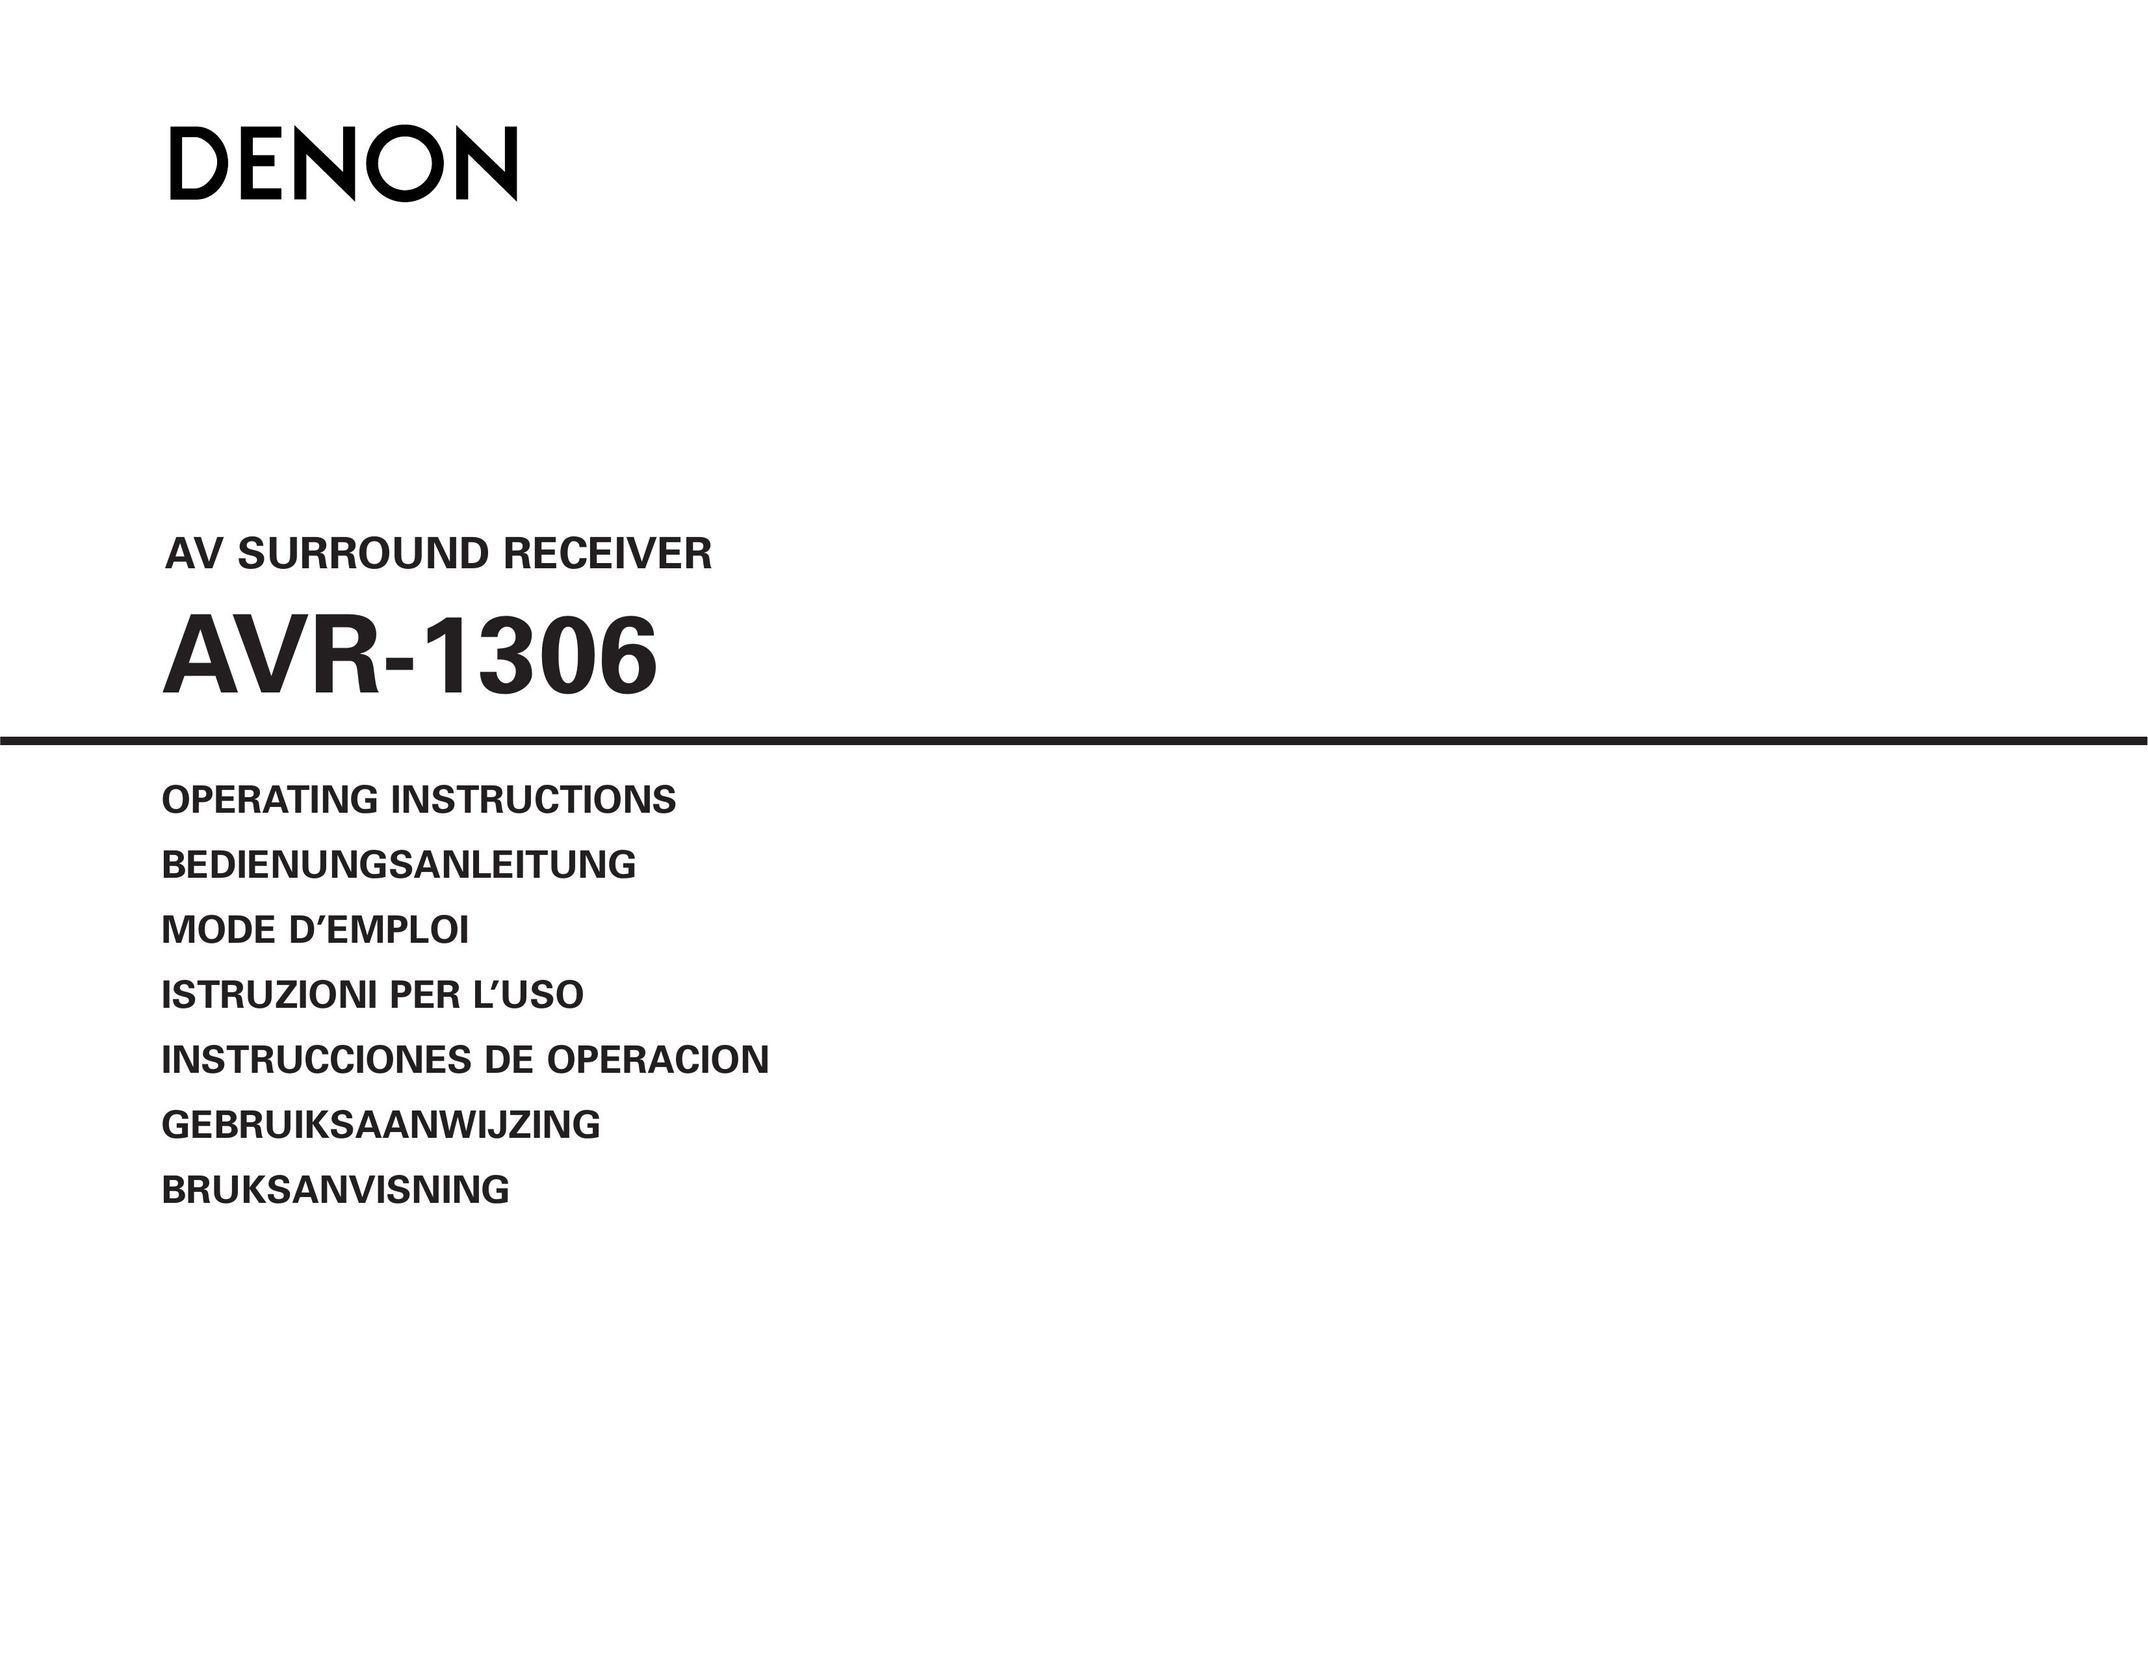 Denon AVR-1306 Stereo Receiver User Manual